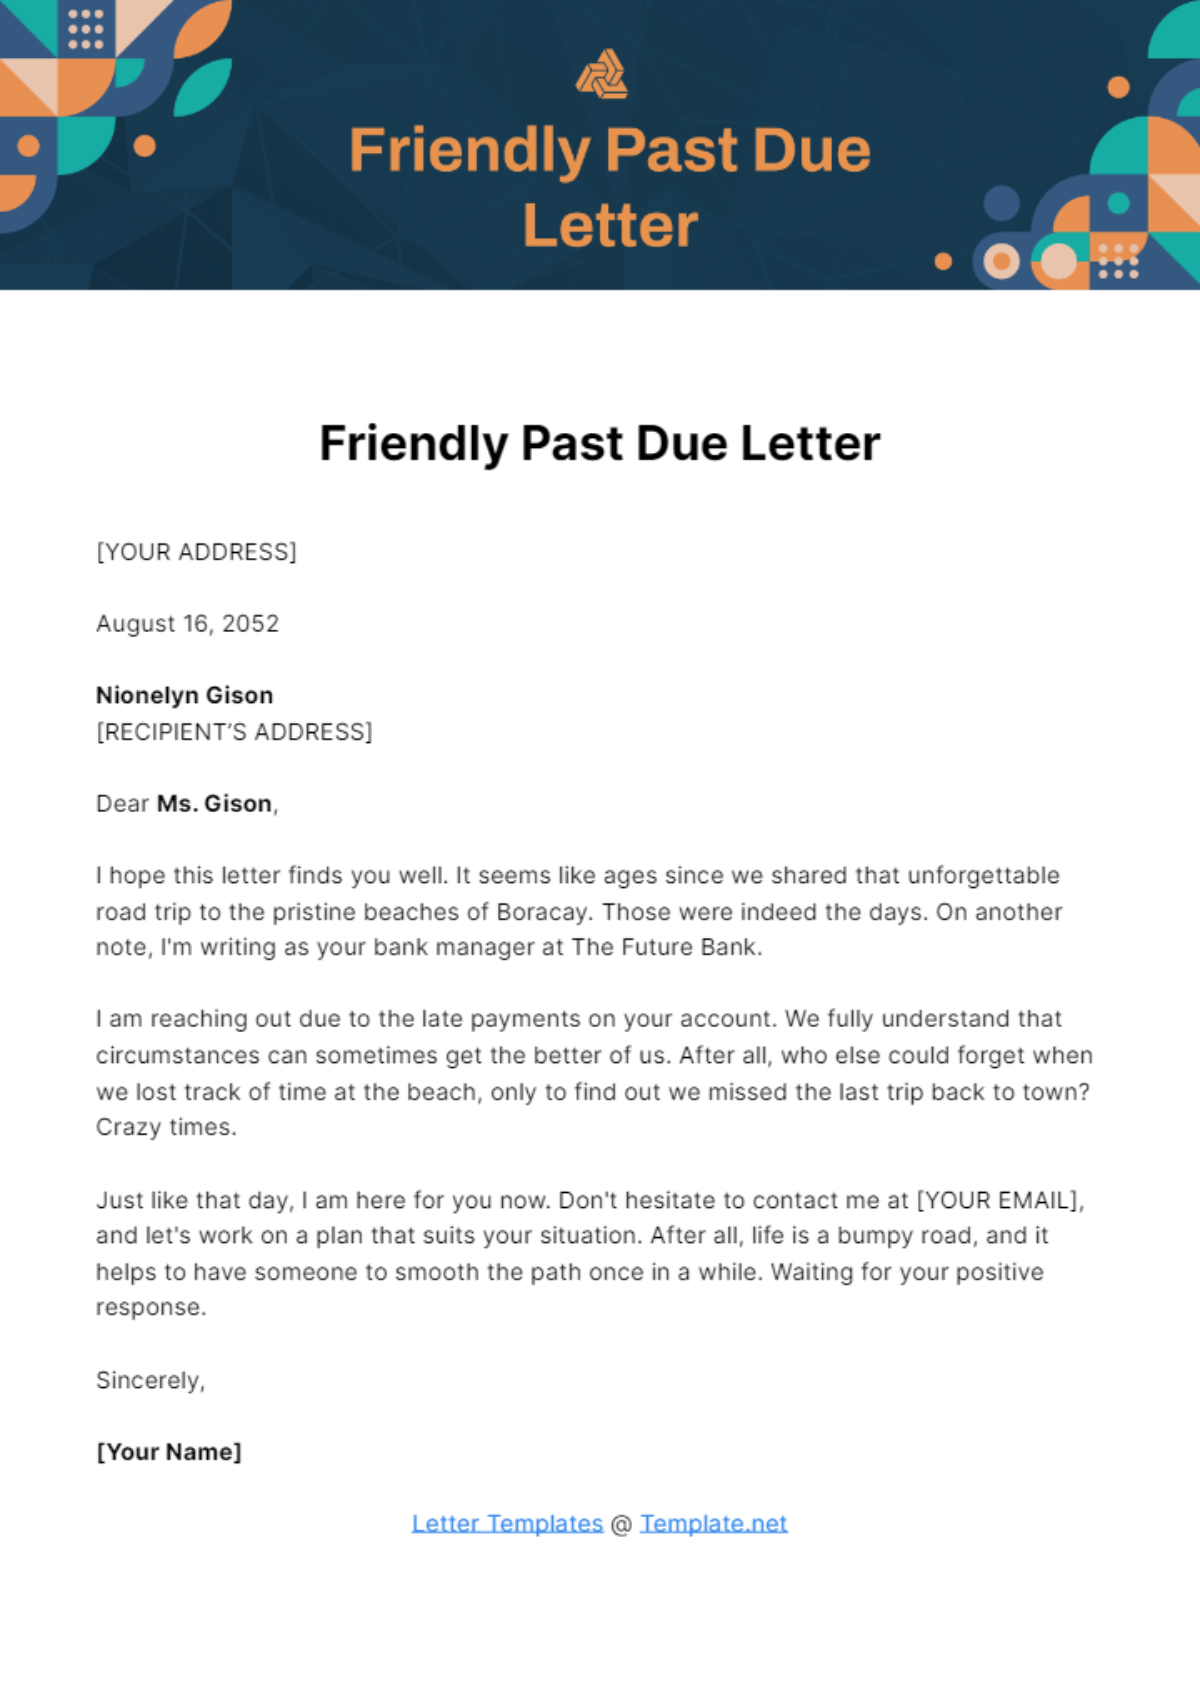 Friendly Past Due Letter Template